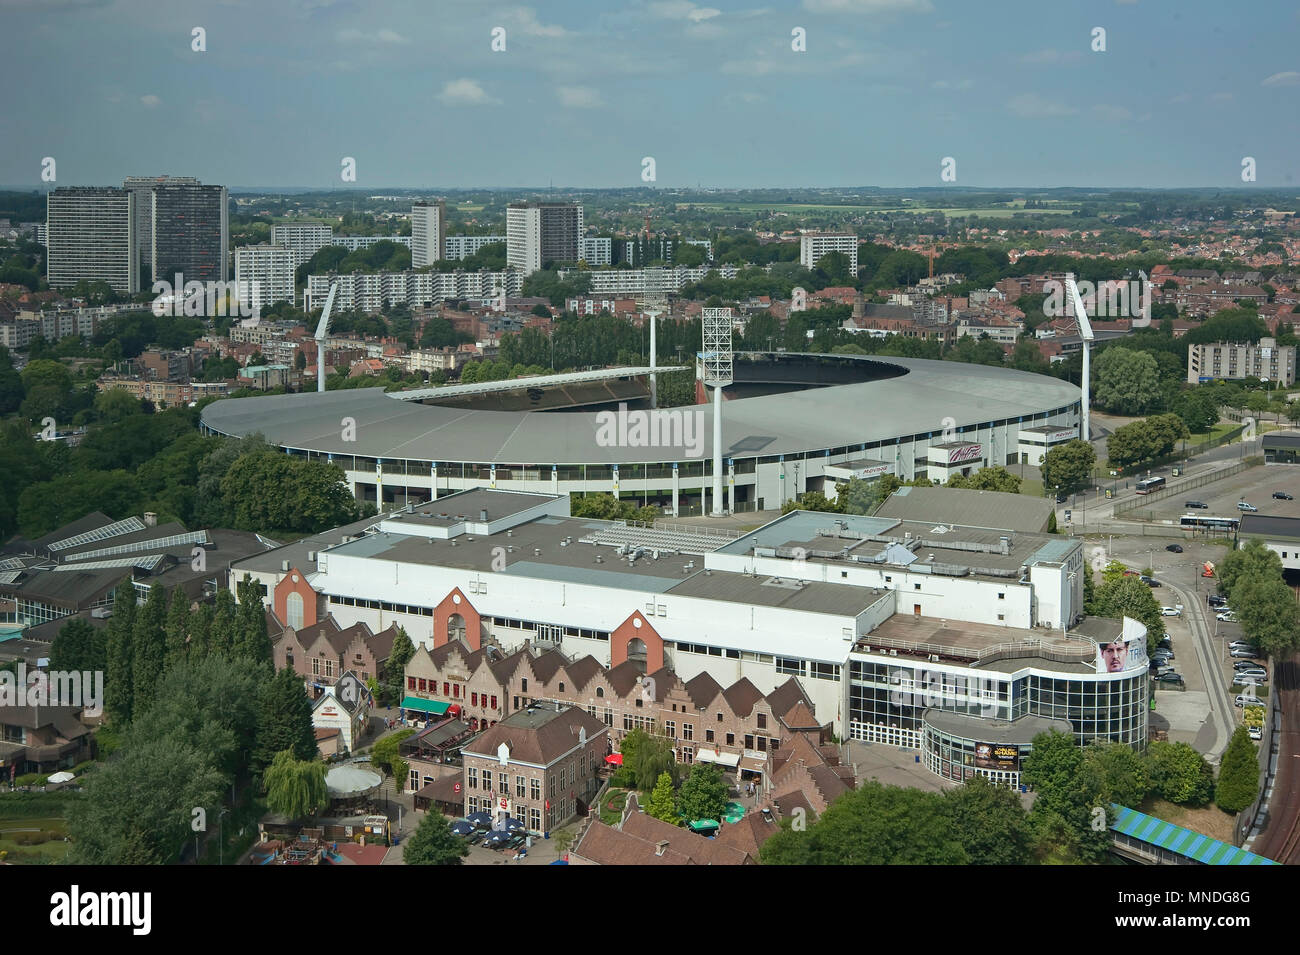 The King Baudouin Stadium (previously called the Heysel Stadium), Brussels, Belgium    Photo © Fabio Mazzarella/Sintesi/Alamy Stock Photo Stock Photo